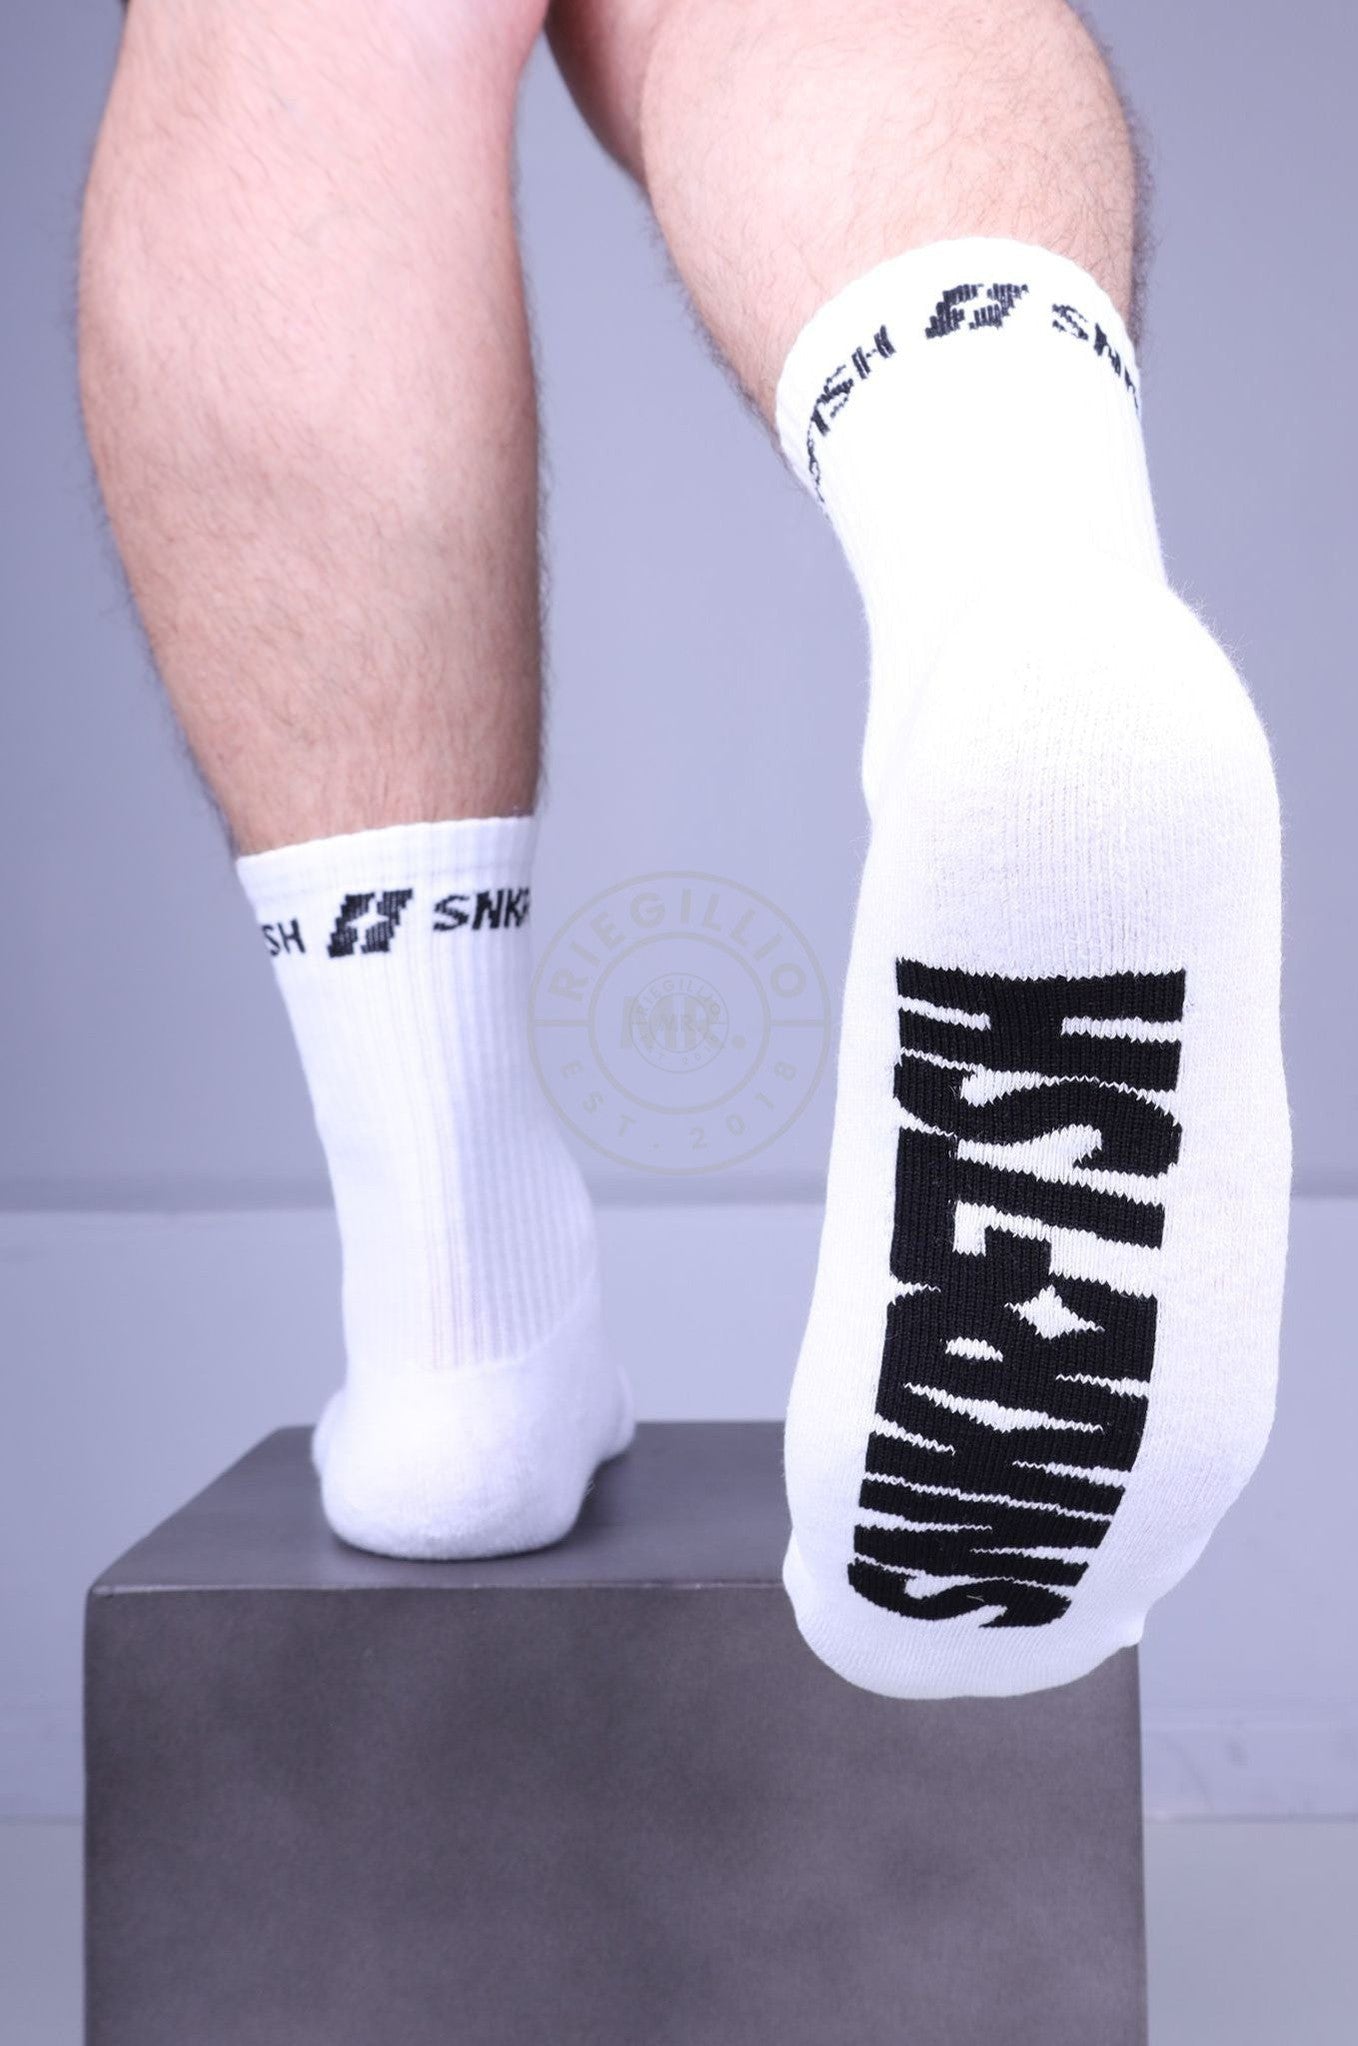 SNKRFTSH Socks - Value Pack (3 pairs) at MR. Riegillio